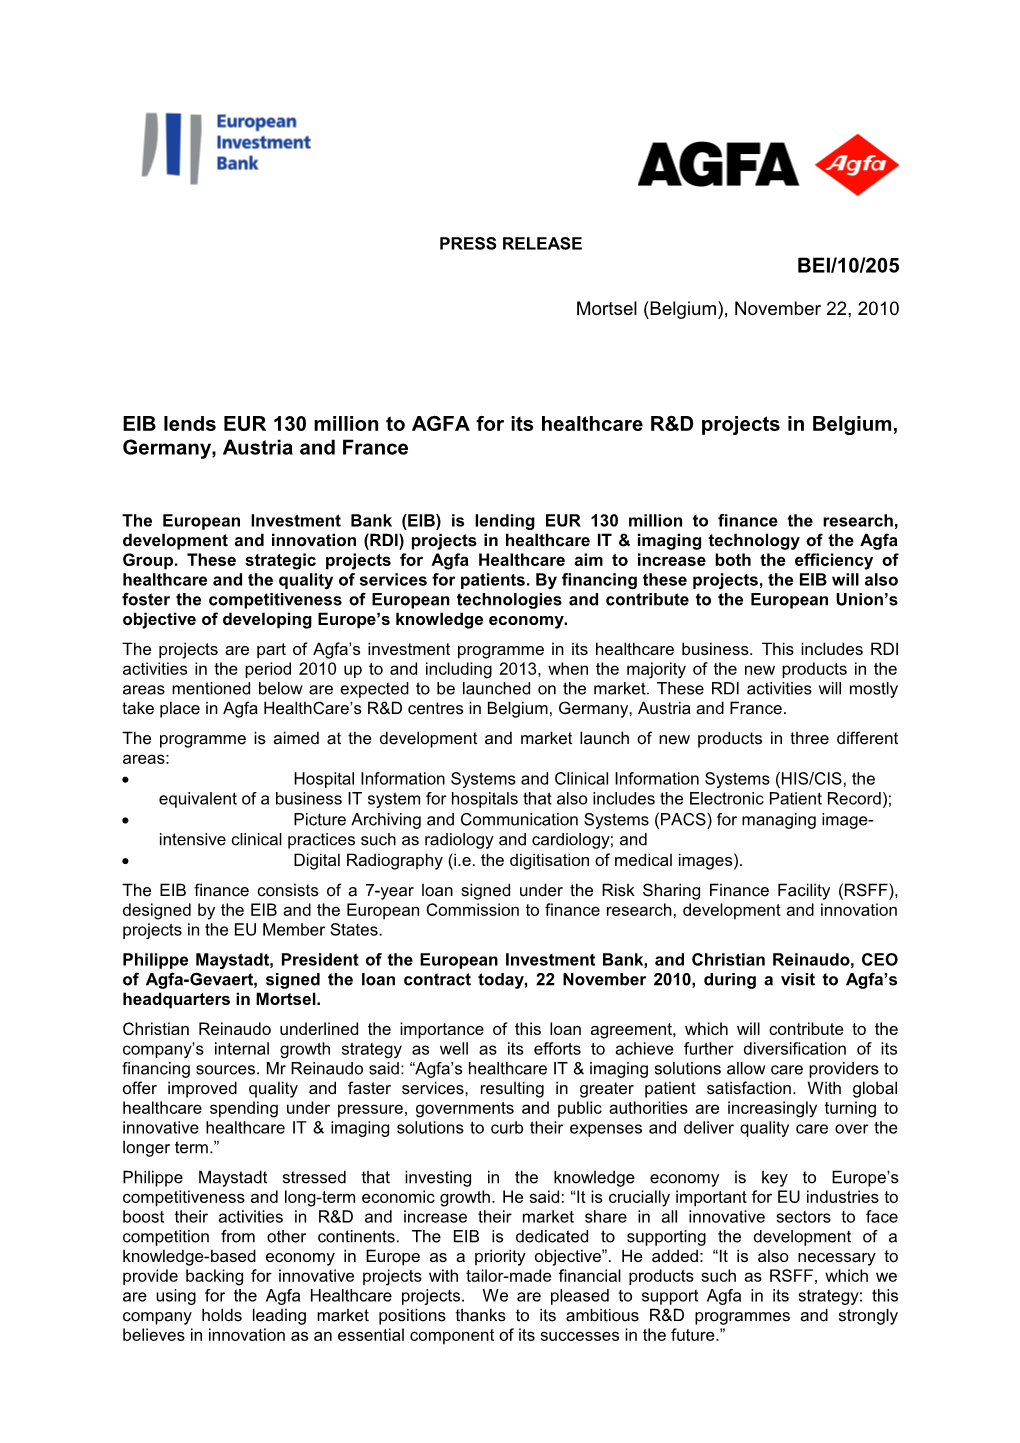 AGFA-EIB Agreement for Agfa Healthcare R&D Projects